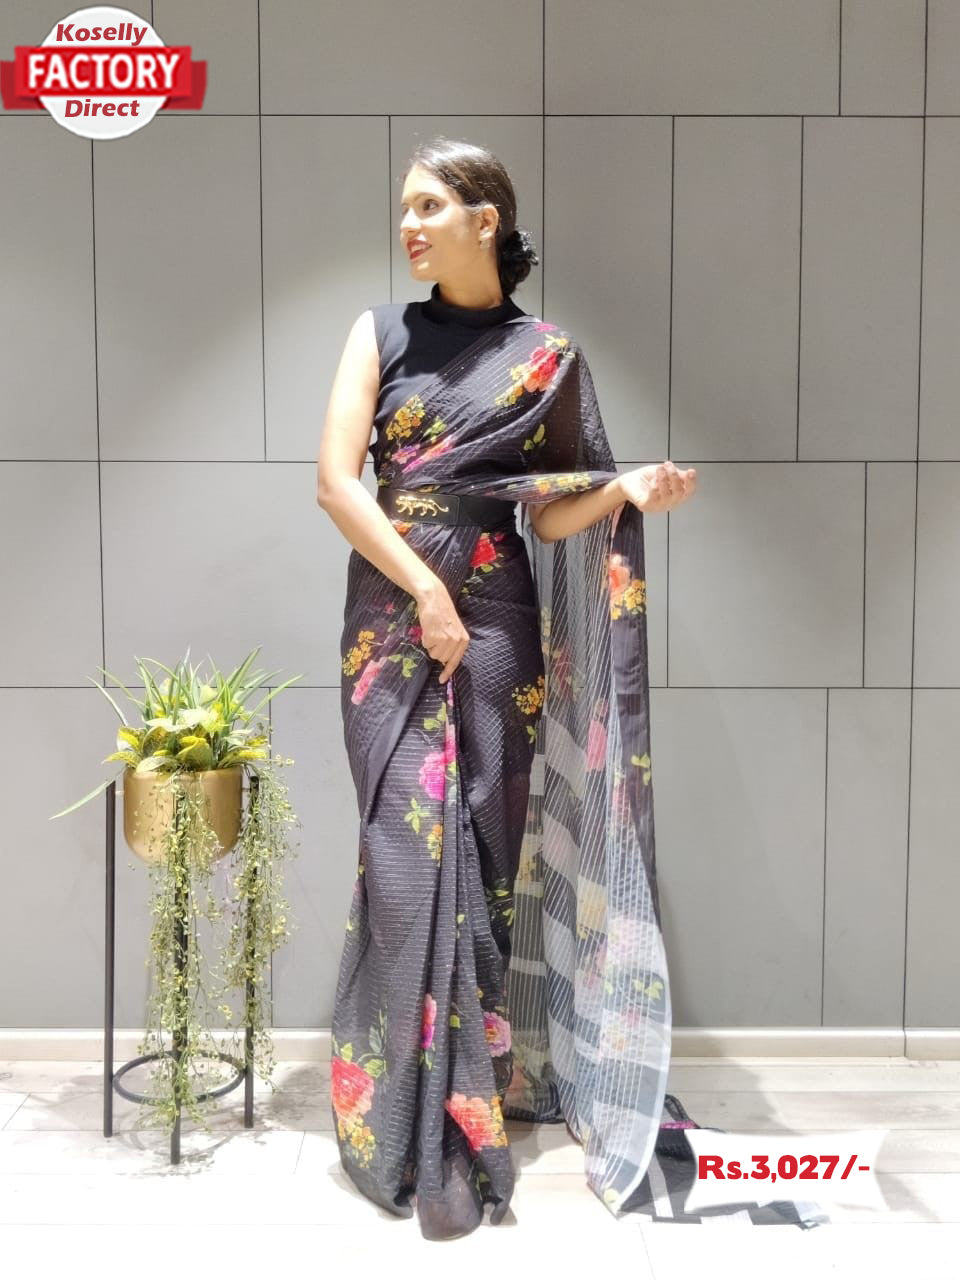 Deepika Padukone looks ethereal in a black Sabyasachi saree!